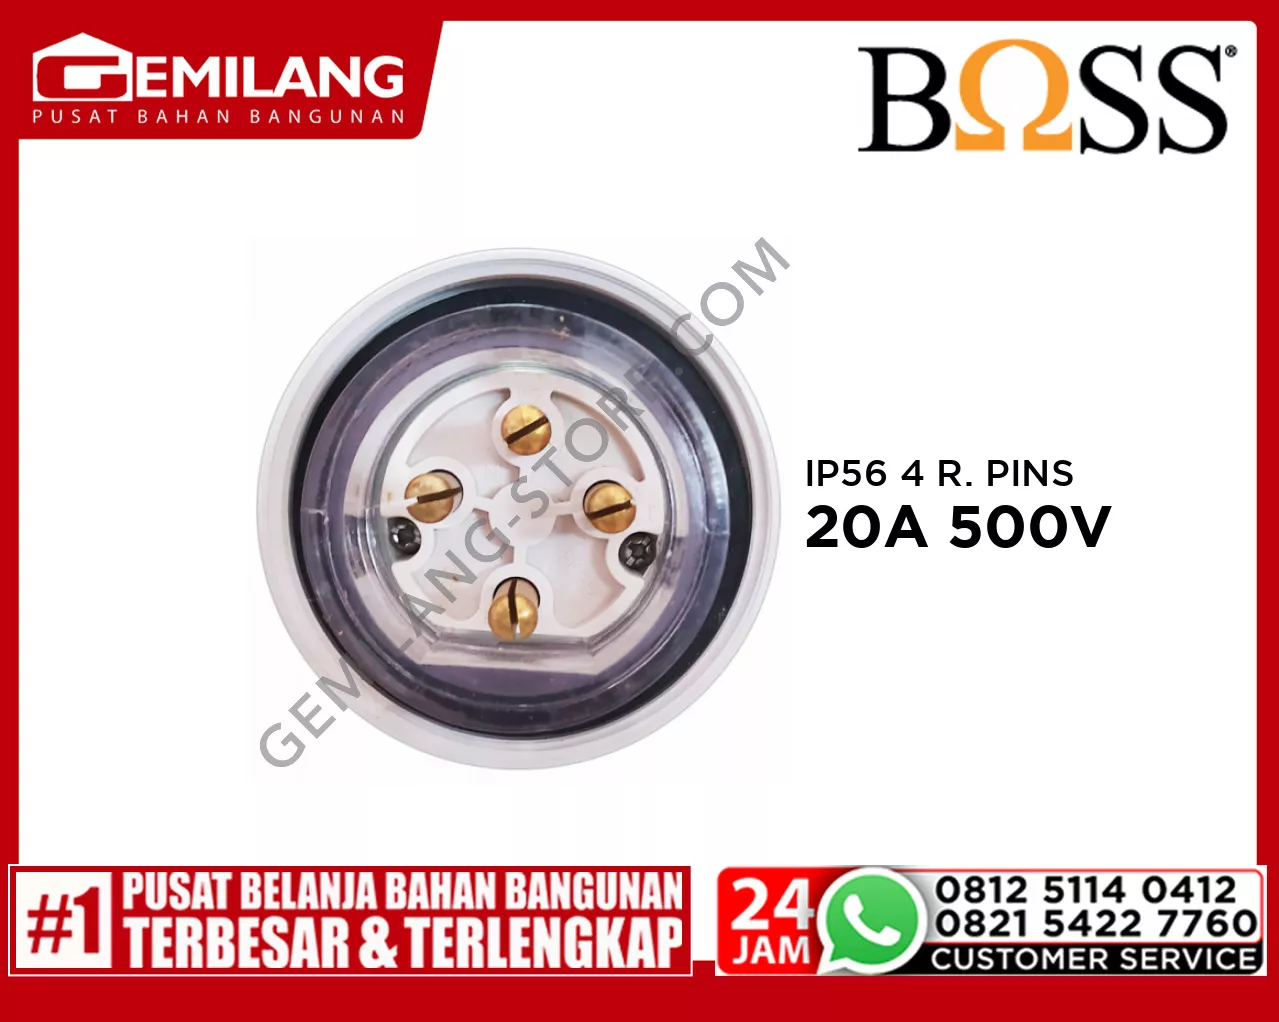 BOSS IP56 4 ROUND PINS 20A 500V B56P420